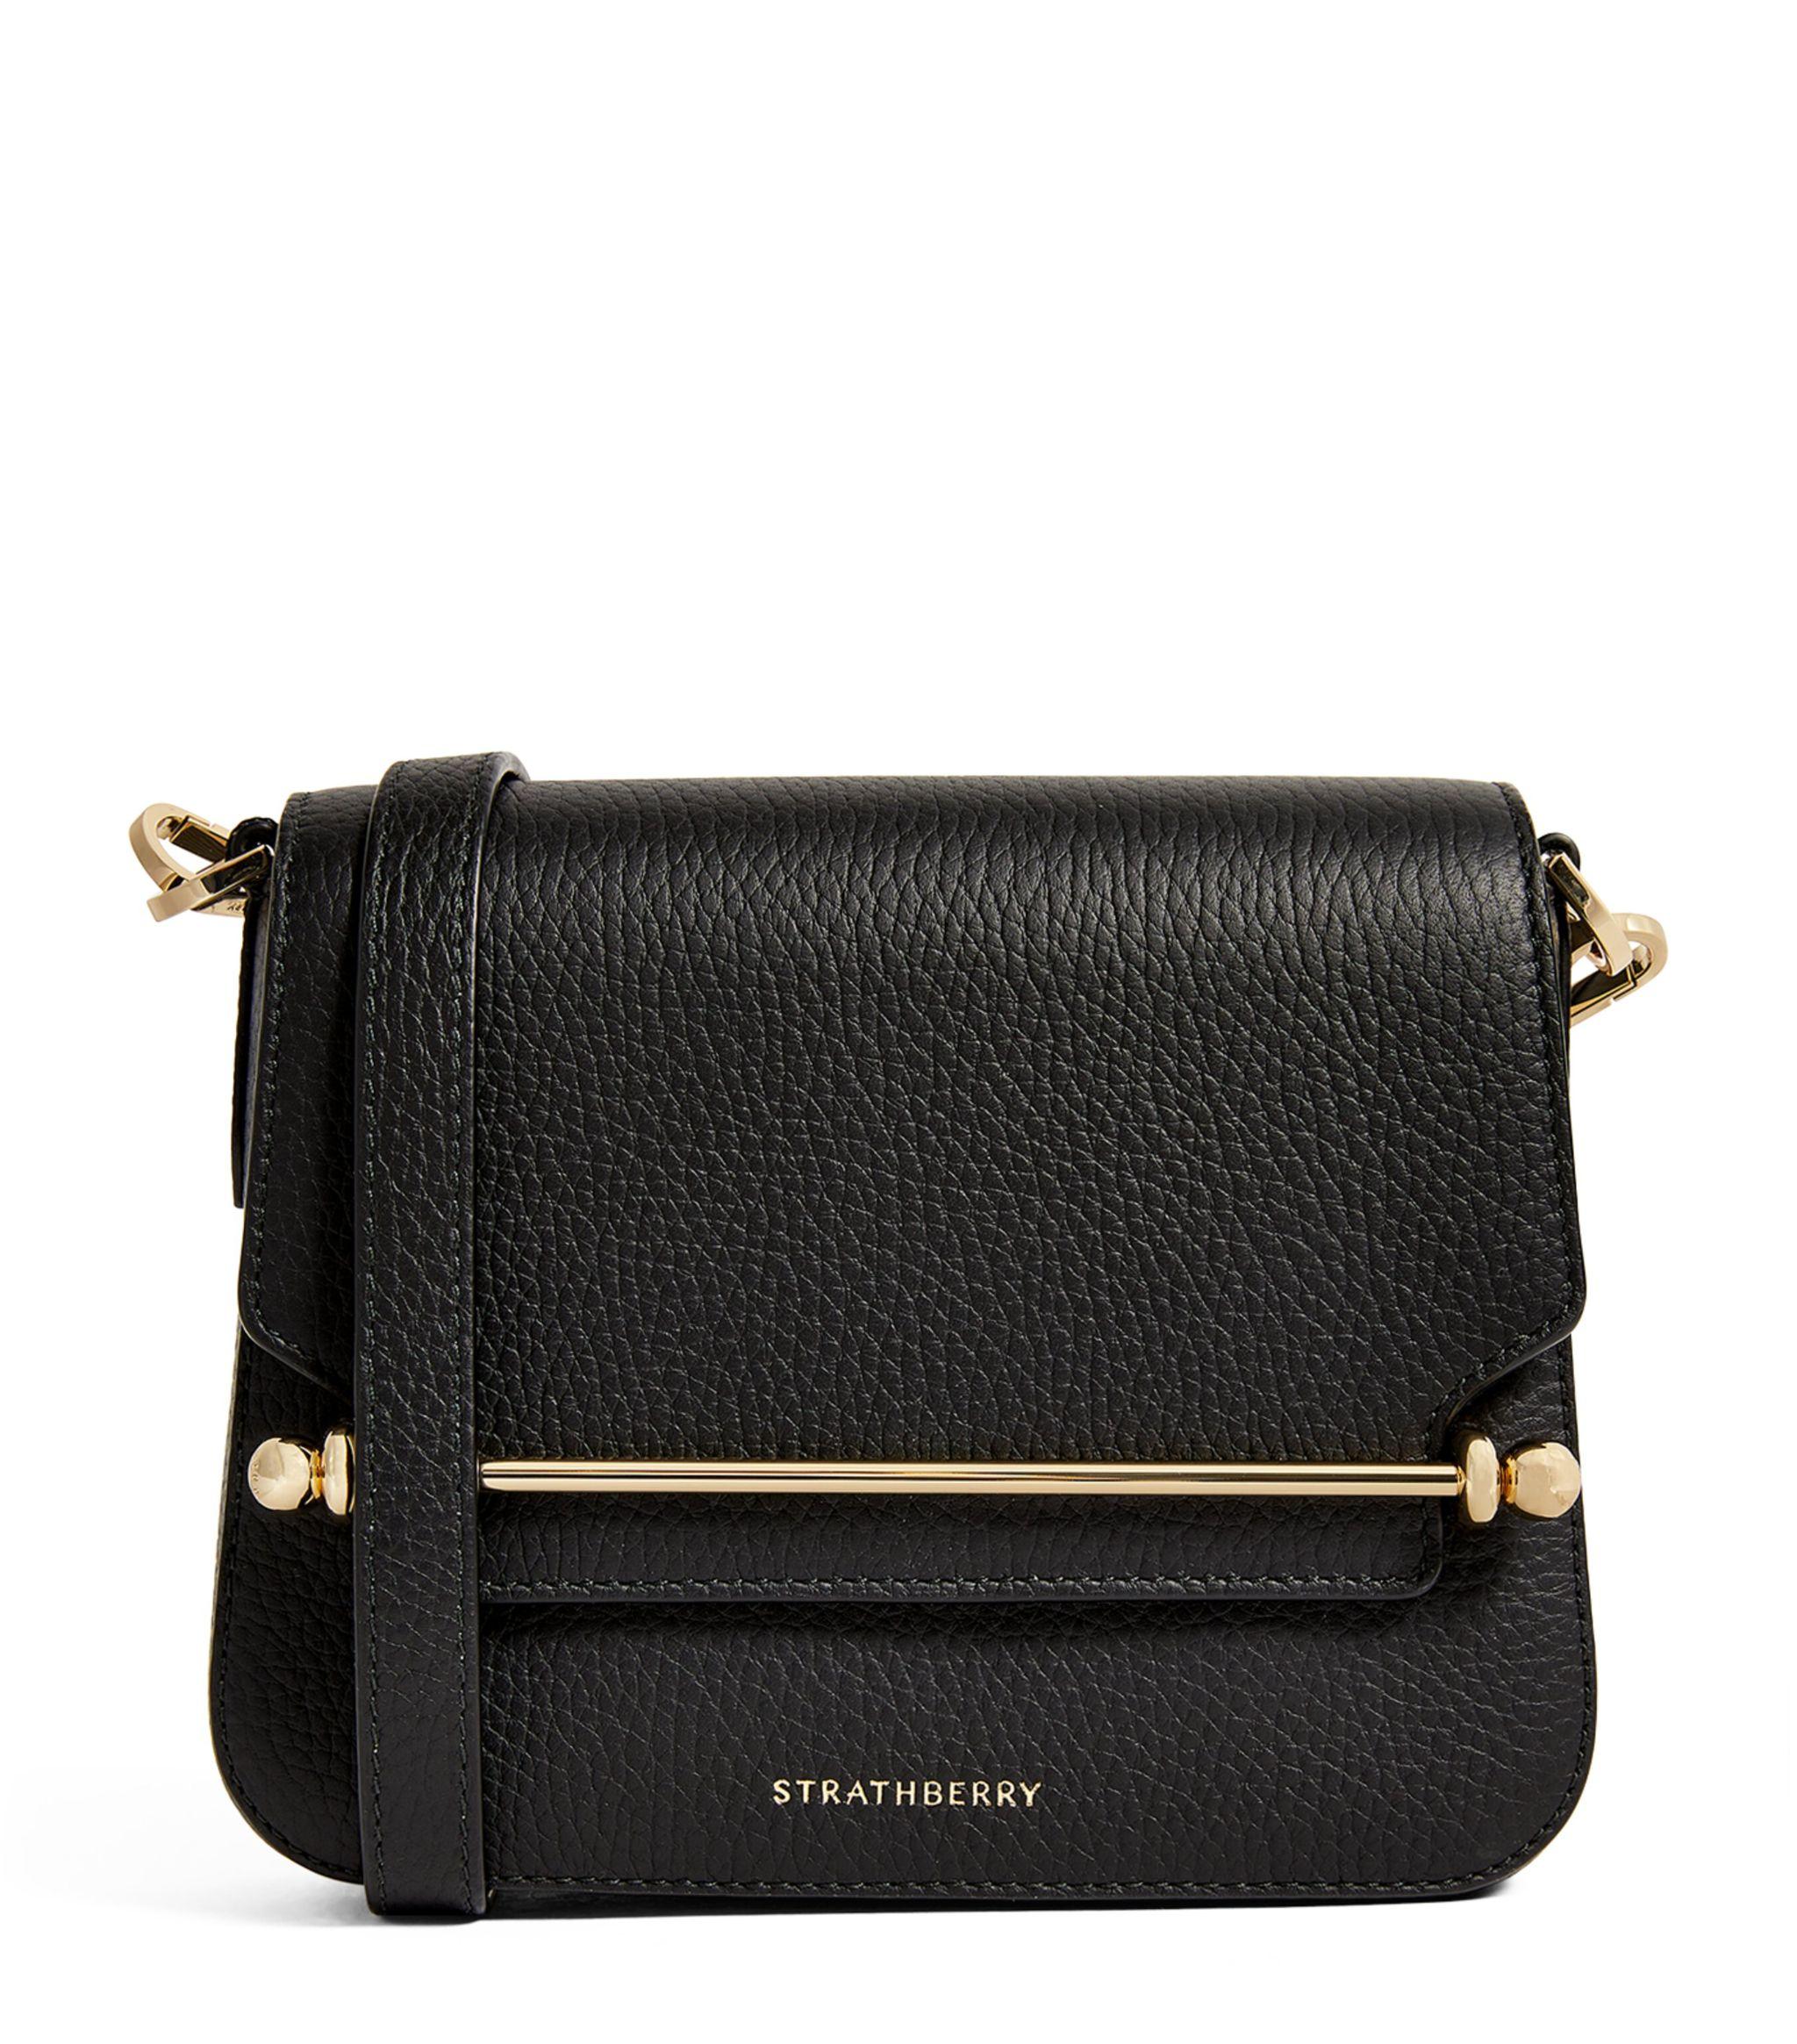 Strathberry Leather Mini Bag - Black Mini Bags, Handbags - STRAT21361